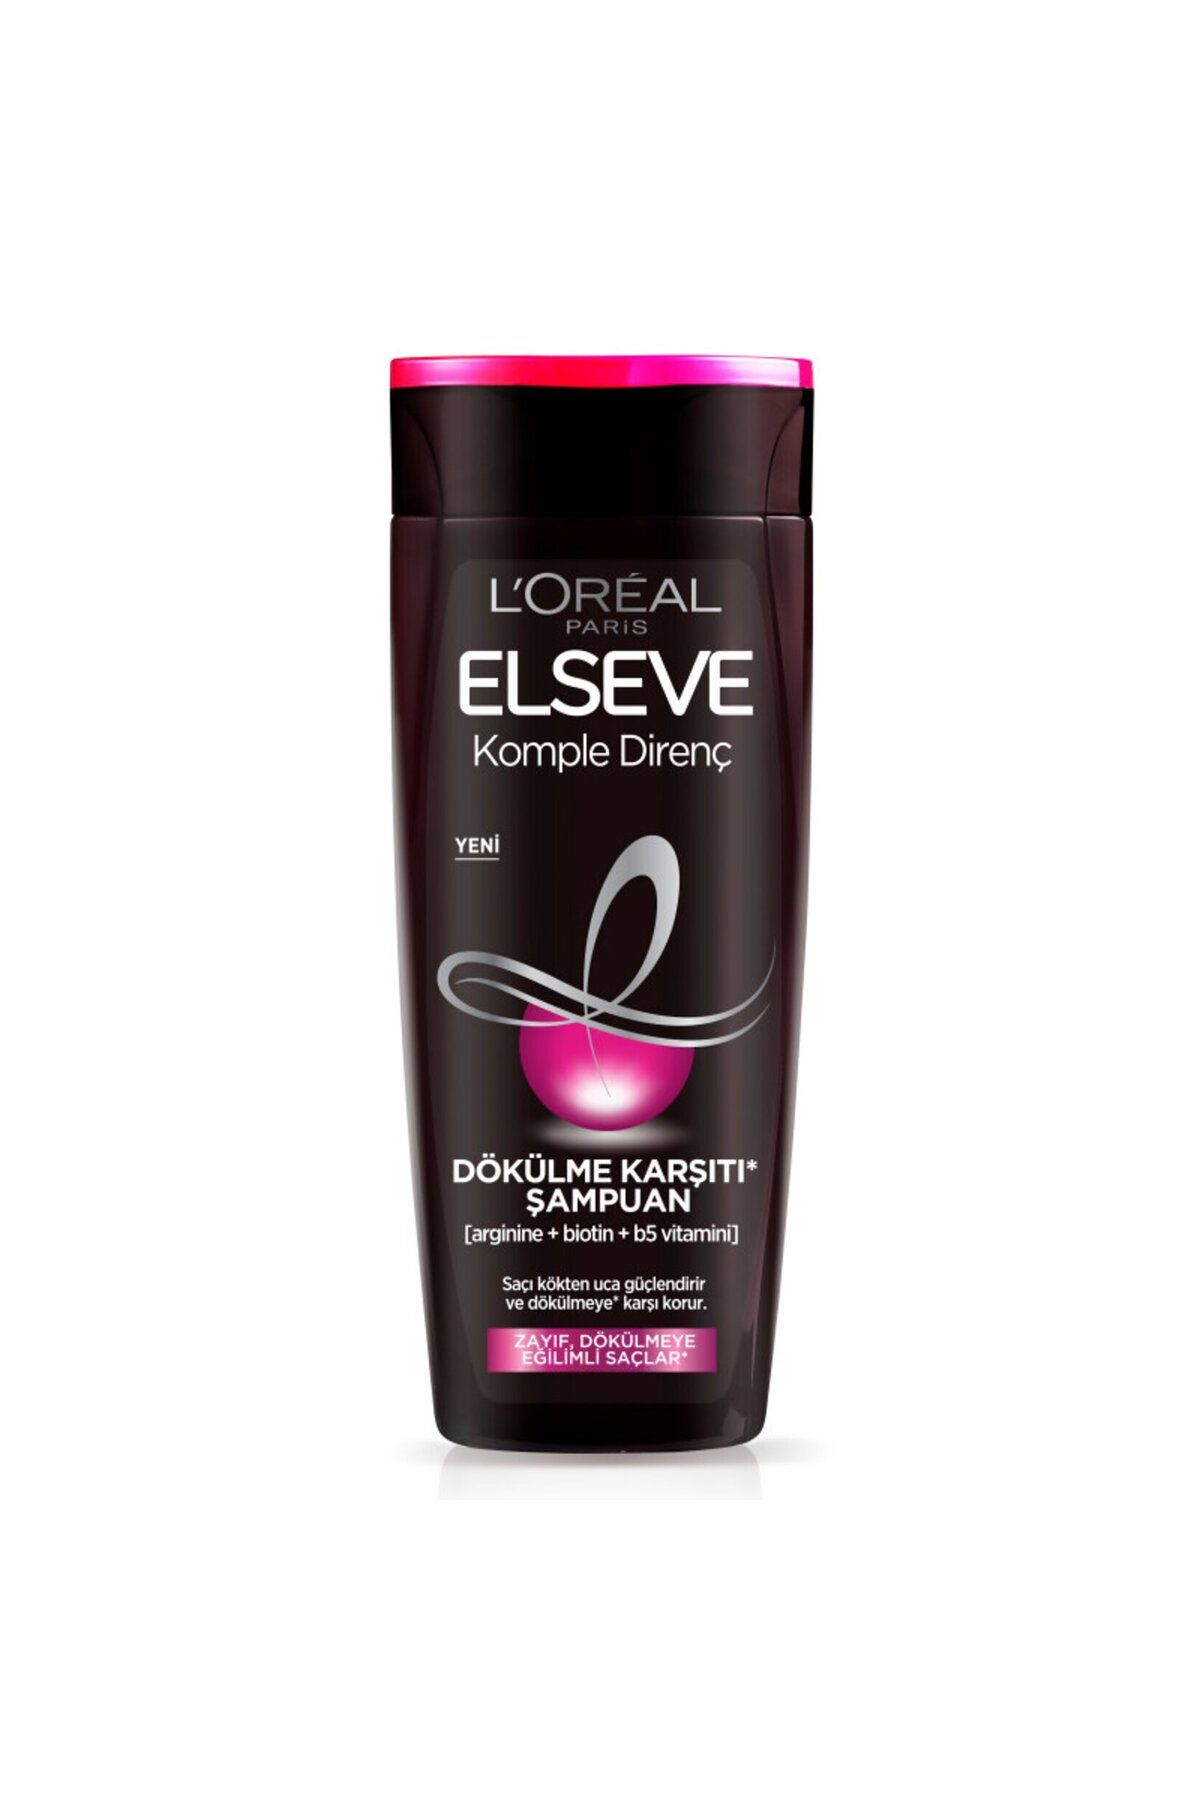 L'Oreal Paris L'oréal Paris Elseve Komple Direnç Dökülme Karşıtı Şampuan 390 ml